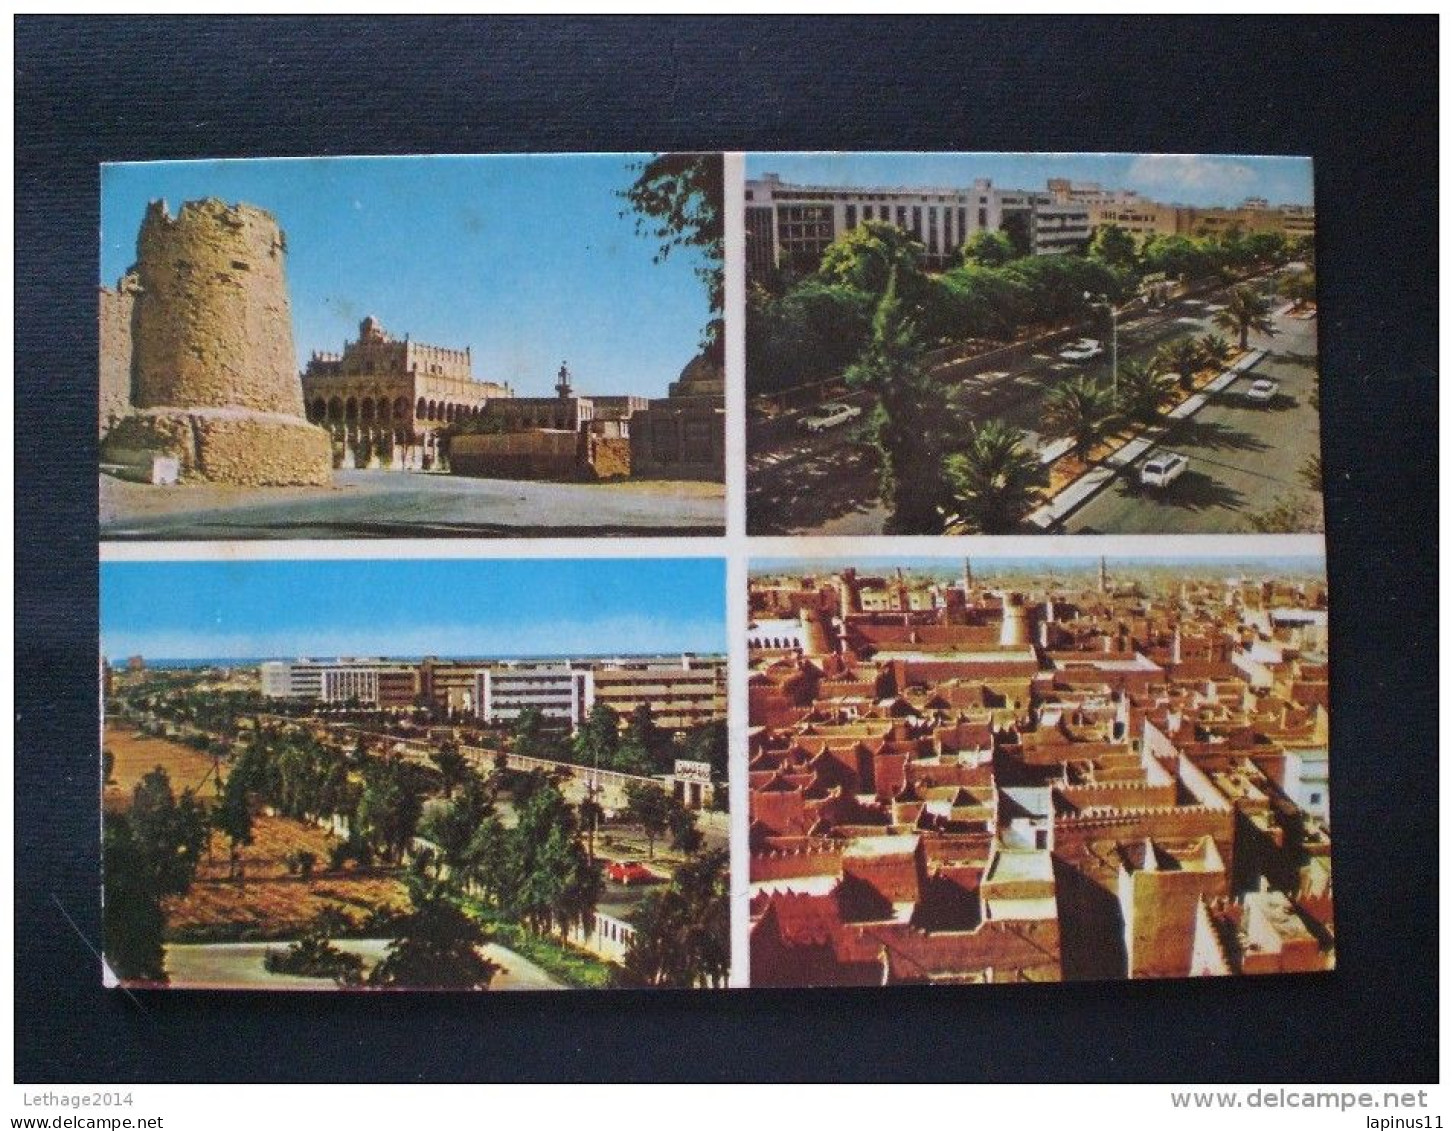 POSTCARD SAUDI ARABIA 1960 OLD AND NEW RIYADH - Saudi Arabia